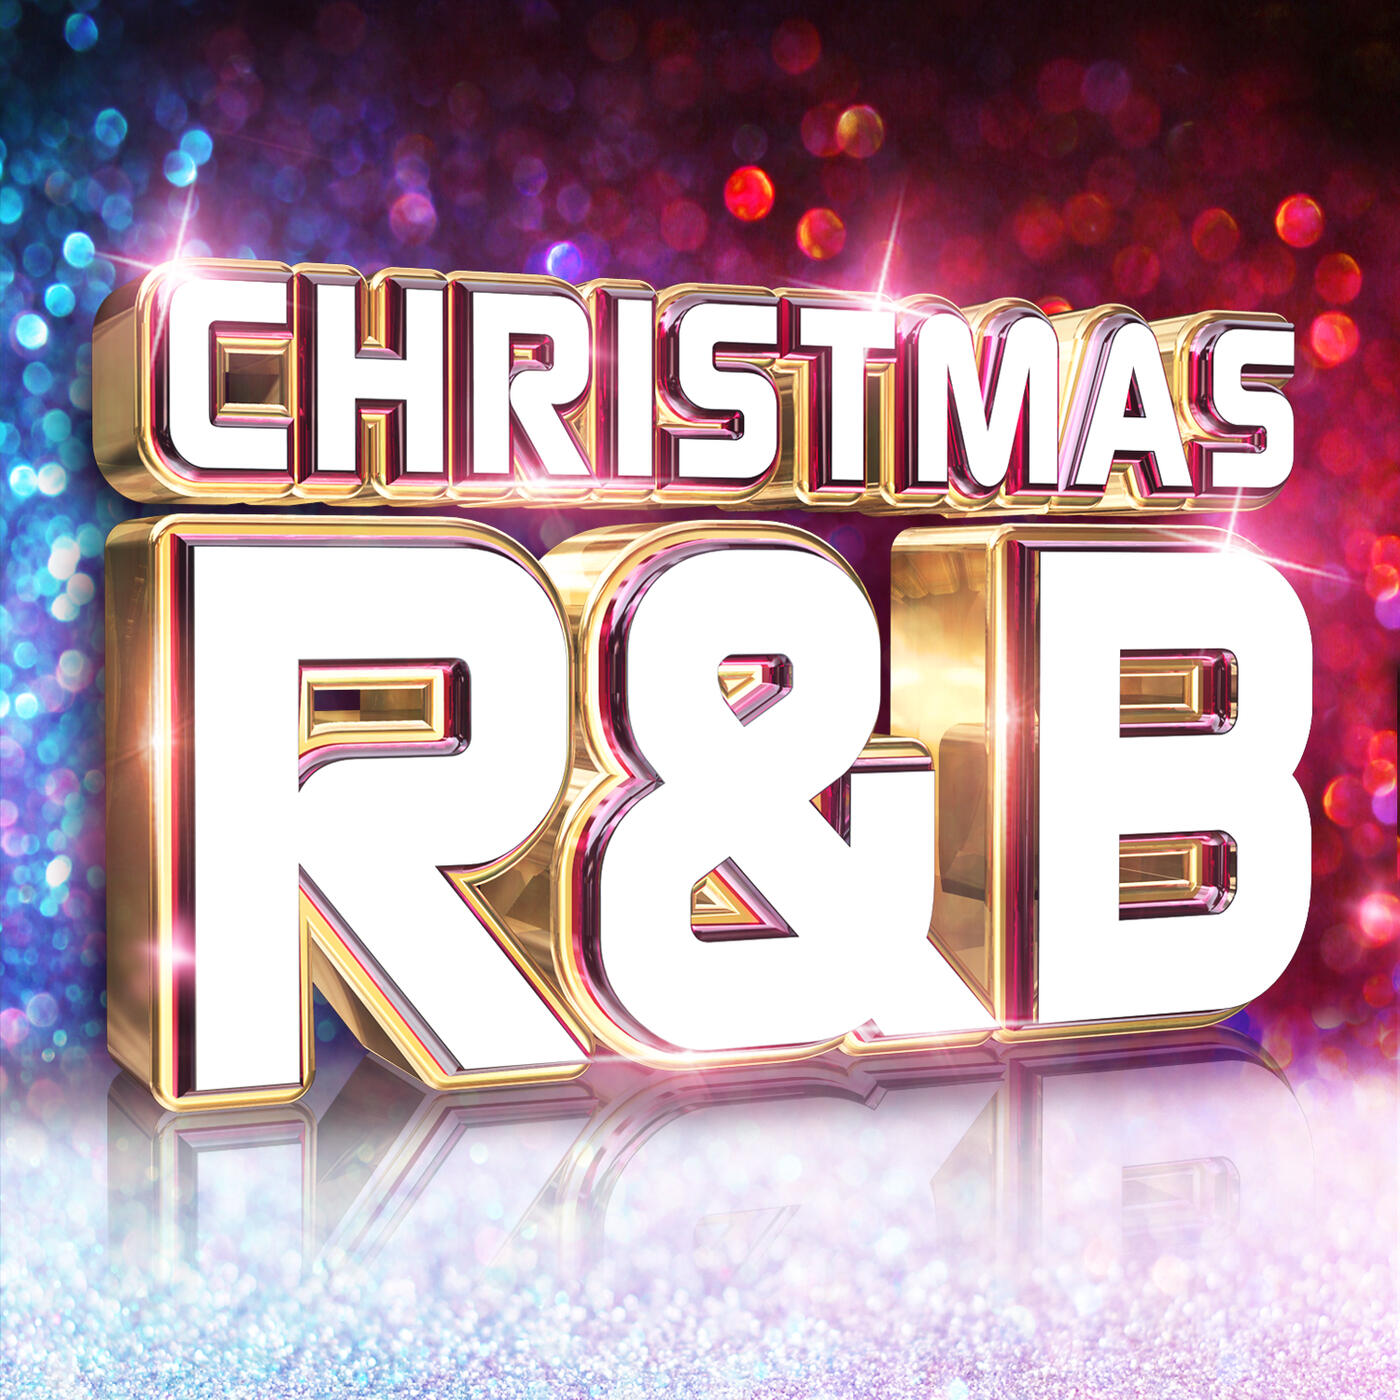 Listen Free to Various Artists - Christmas R&B Radio on iHeartRadio | iHeartRadio